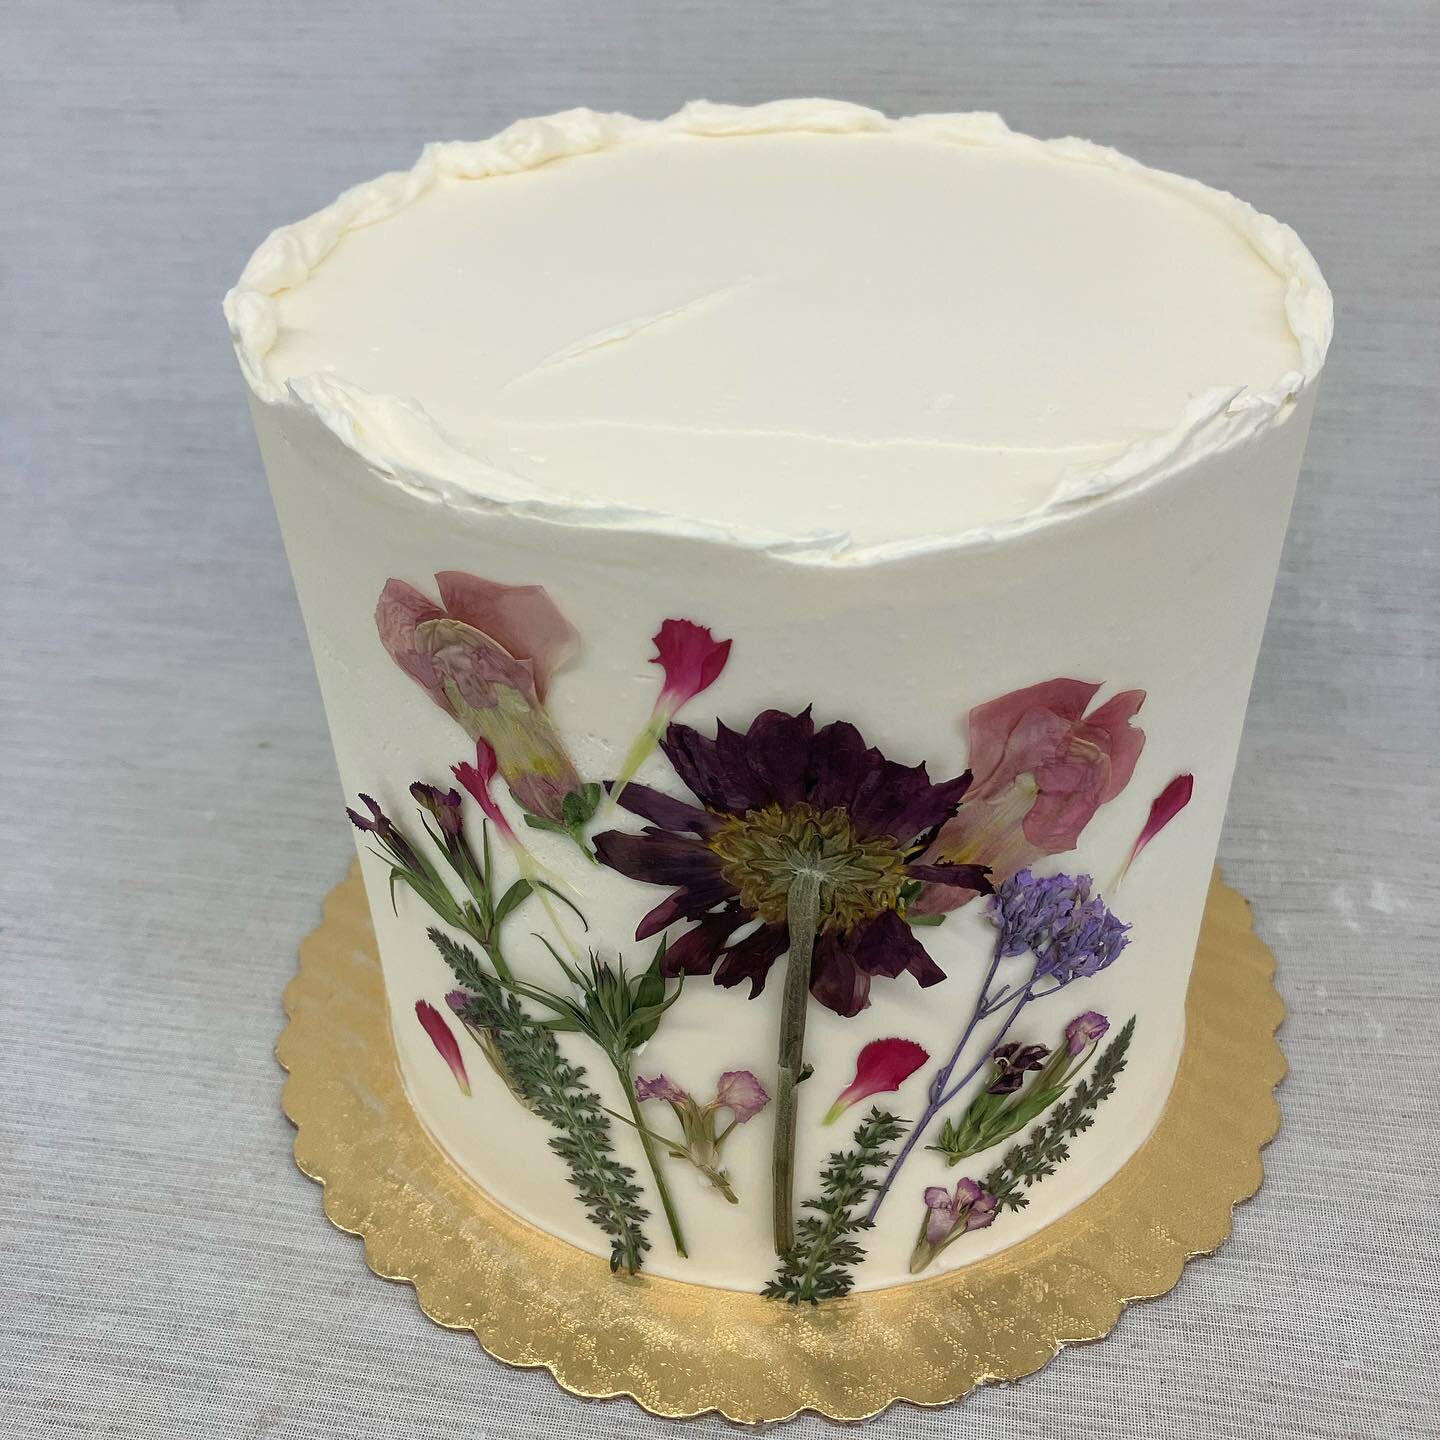 Freshly pressed spring flowers for this 6&rdquo; buttercream cake! Order online: https://www.sweetandshiny.com/shop/p/layered-letter-cake-8m93j